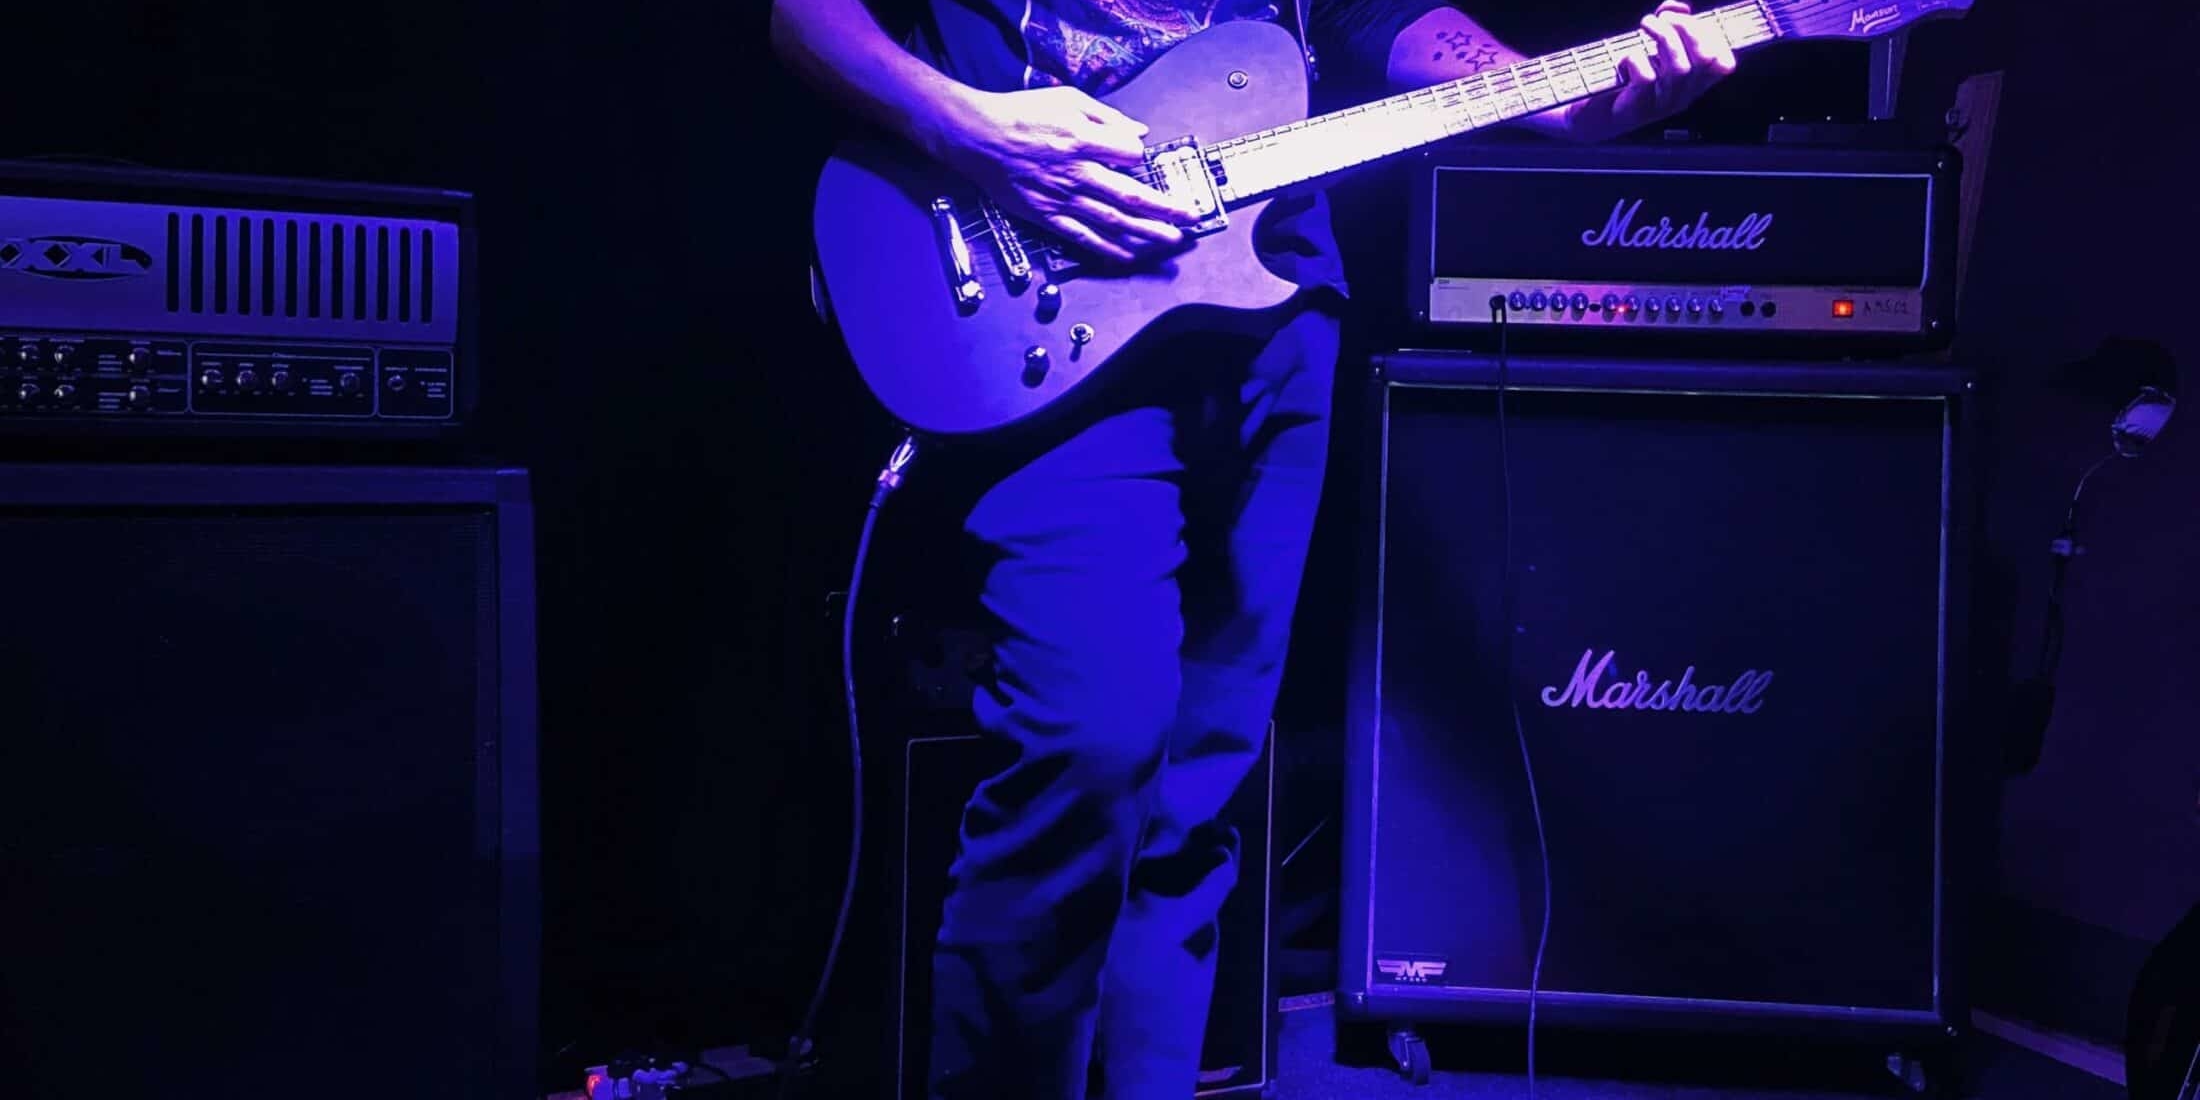 AMS Student using Manson Guitar Works Guitar